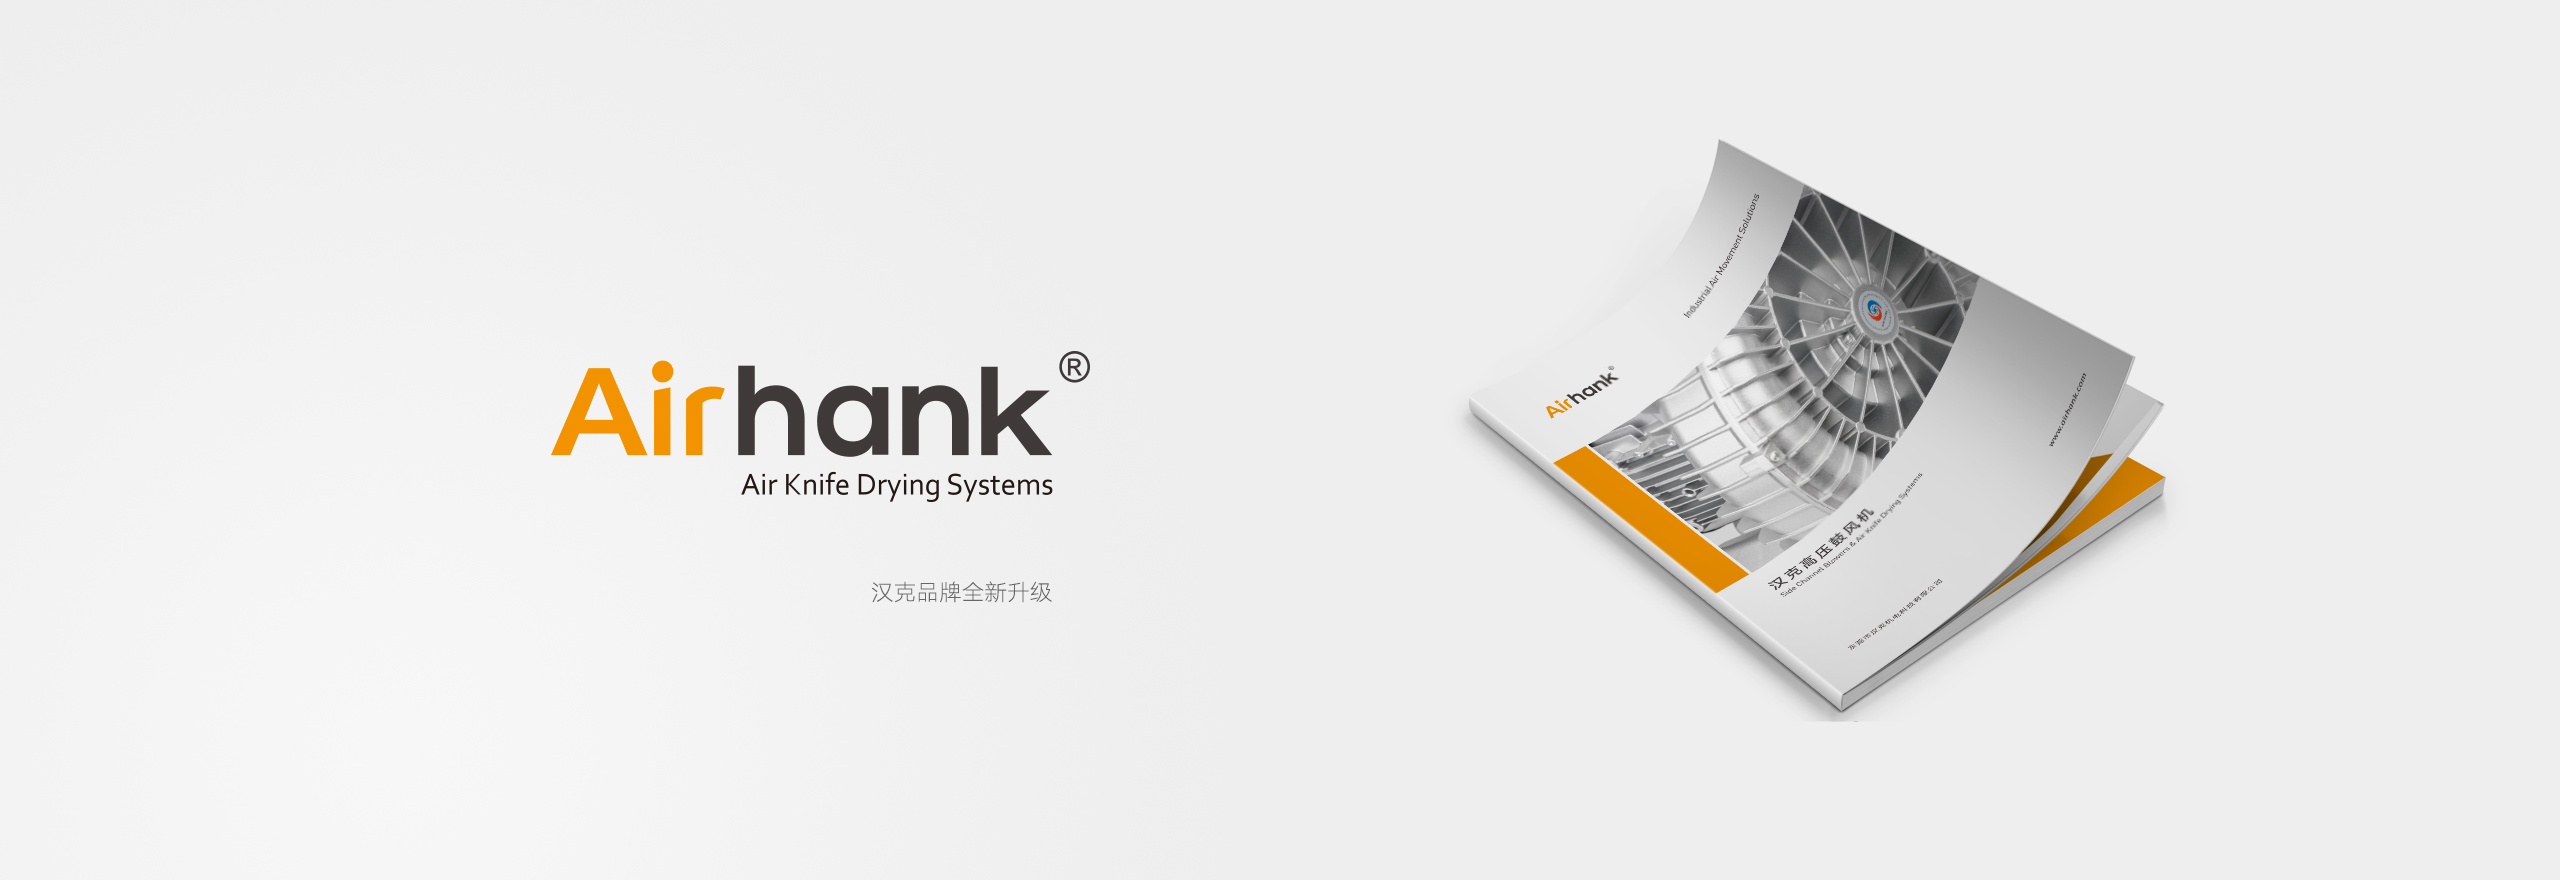 Airhank汉克品牌全新升级